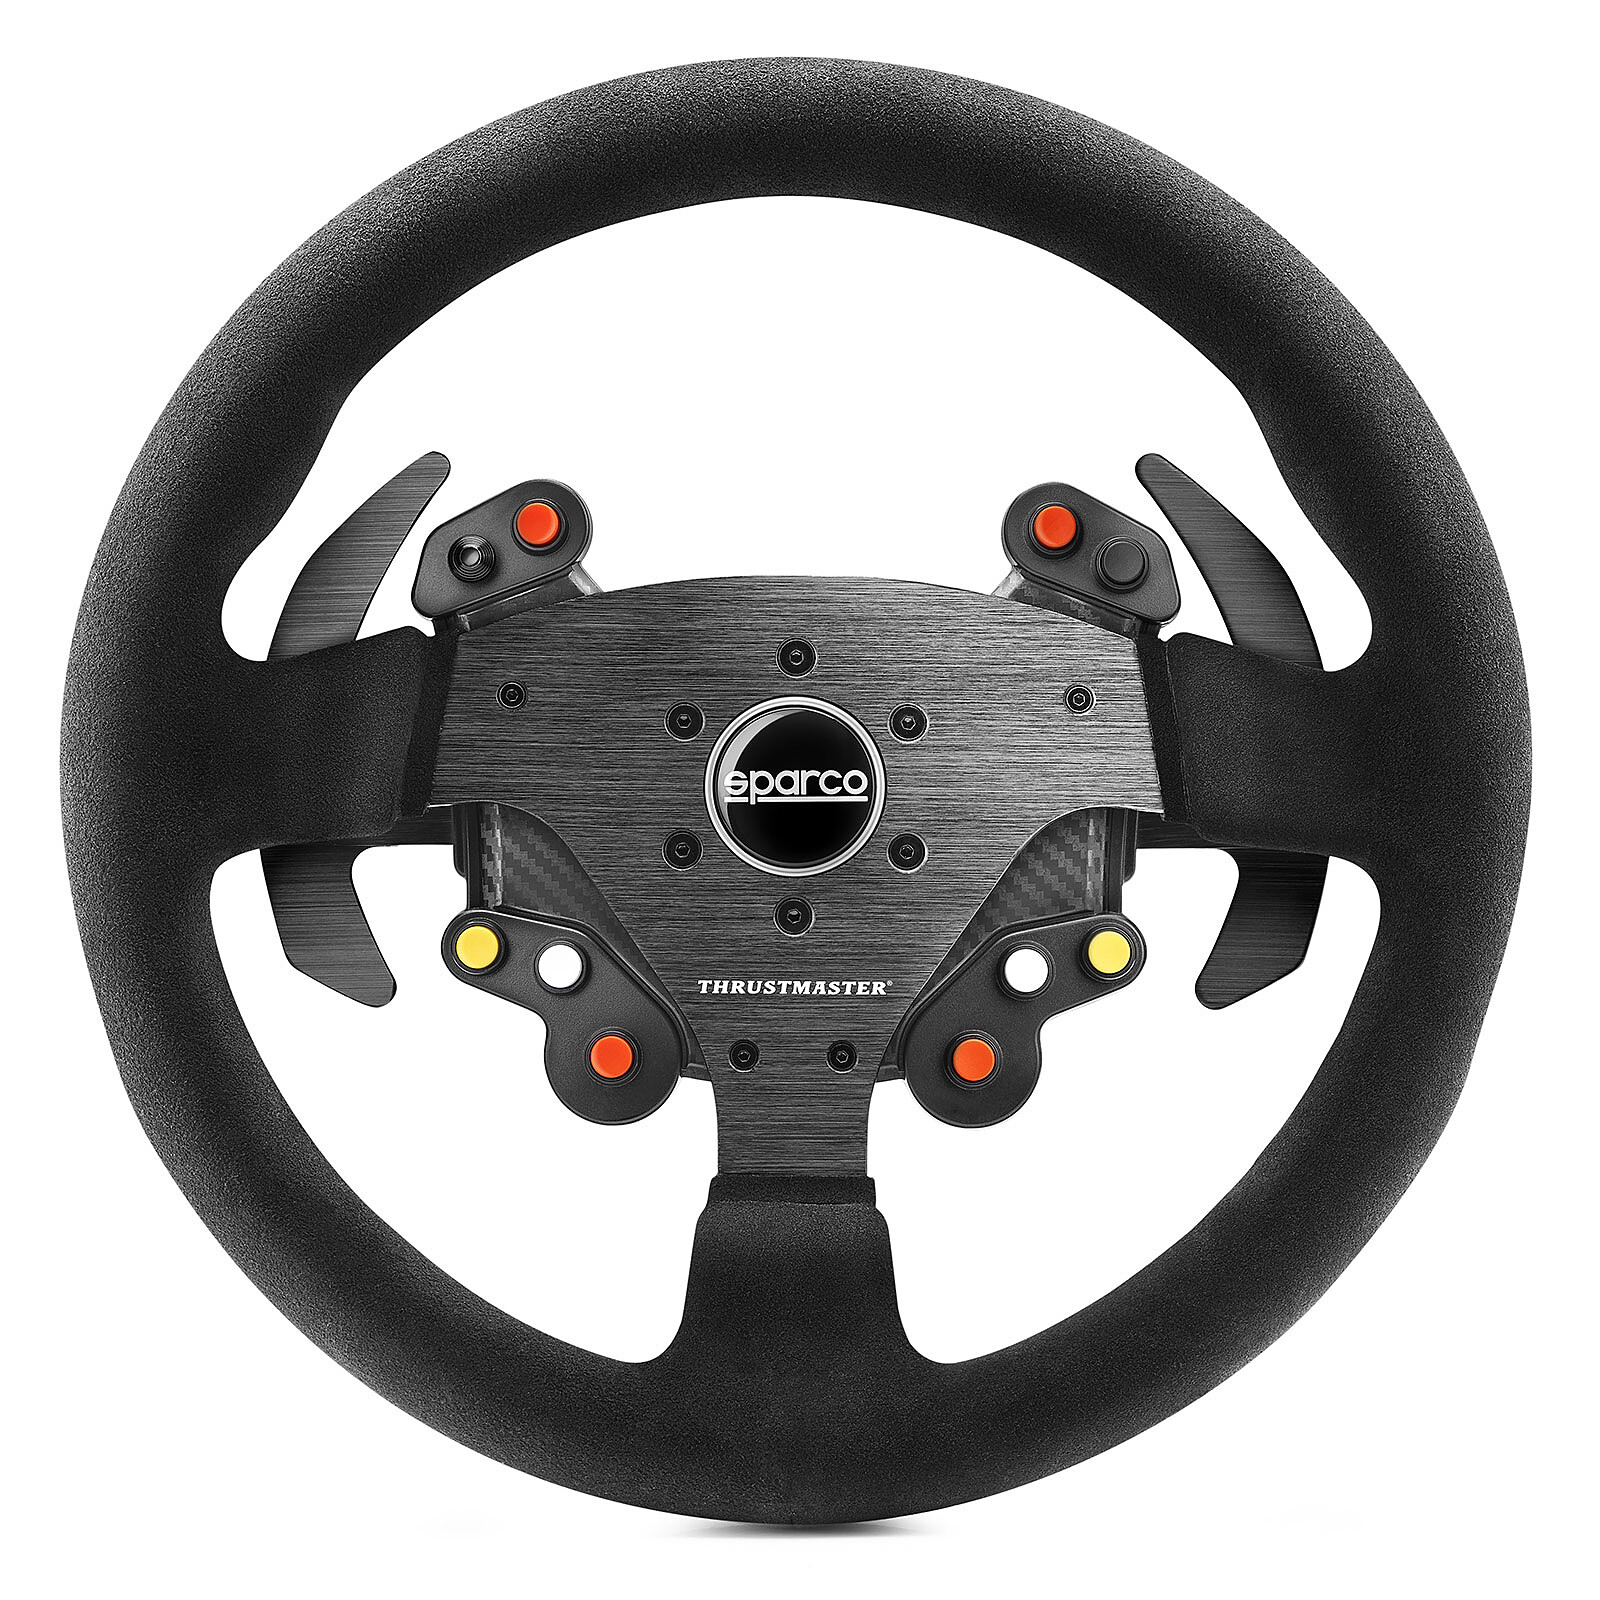 Thrustmaster T248 - PC game racing wheel - LDLC 3-year warranty